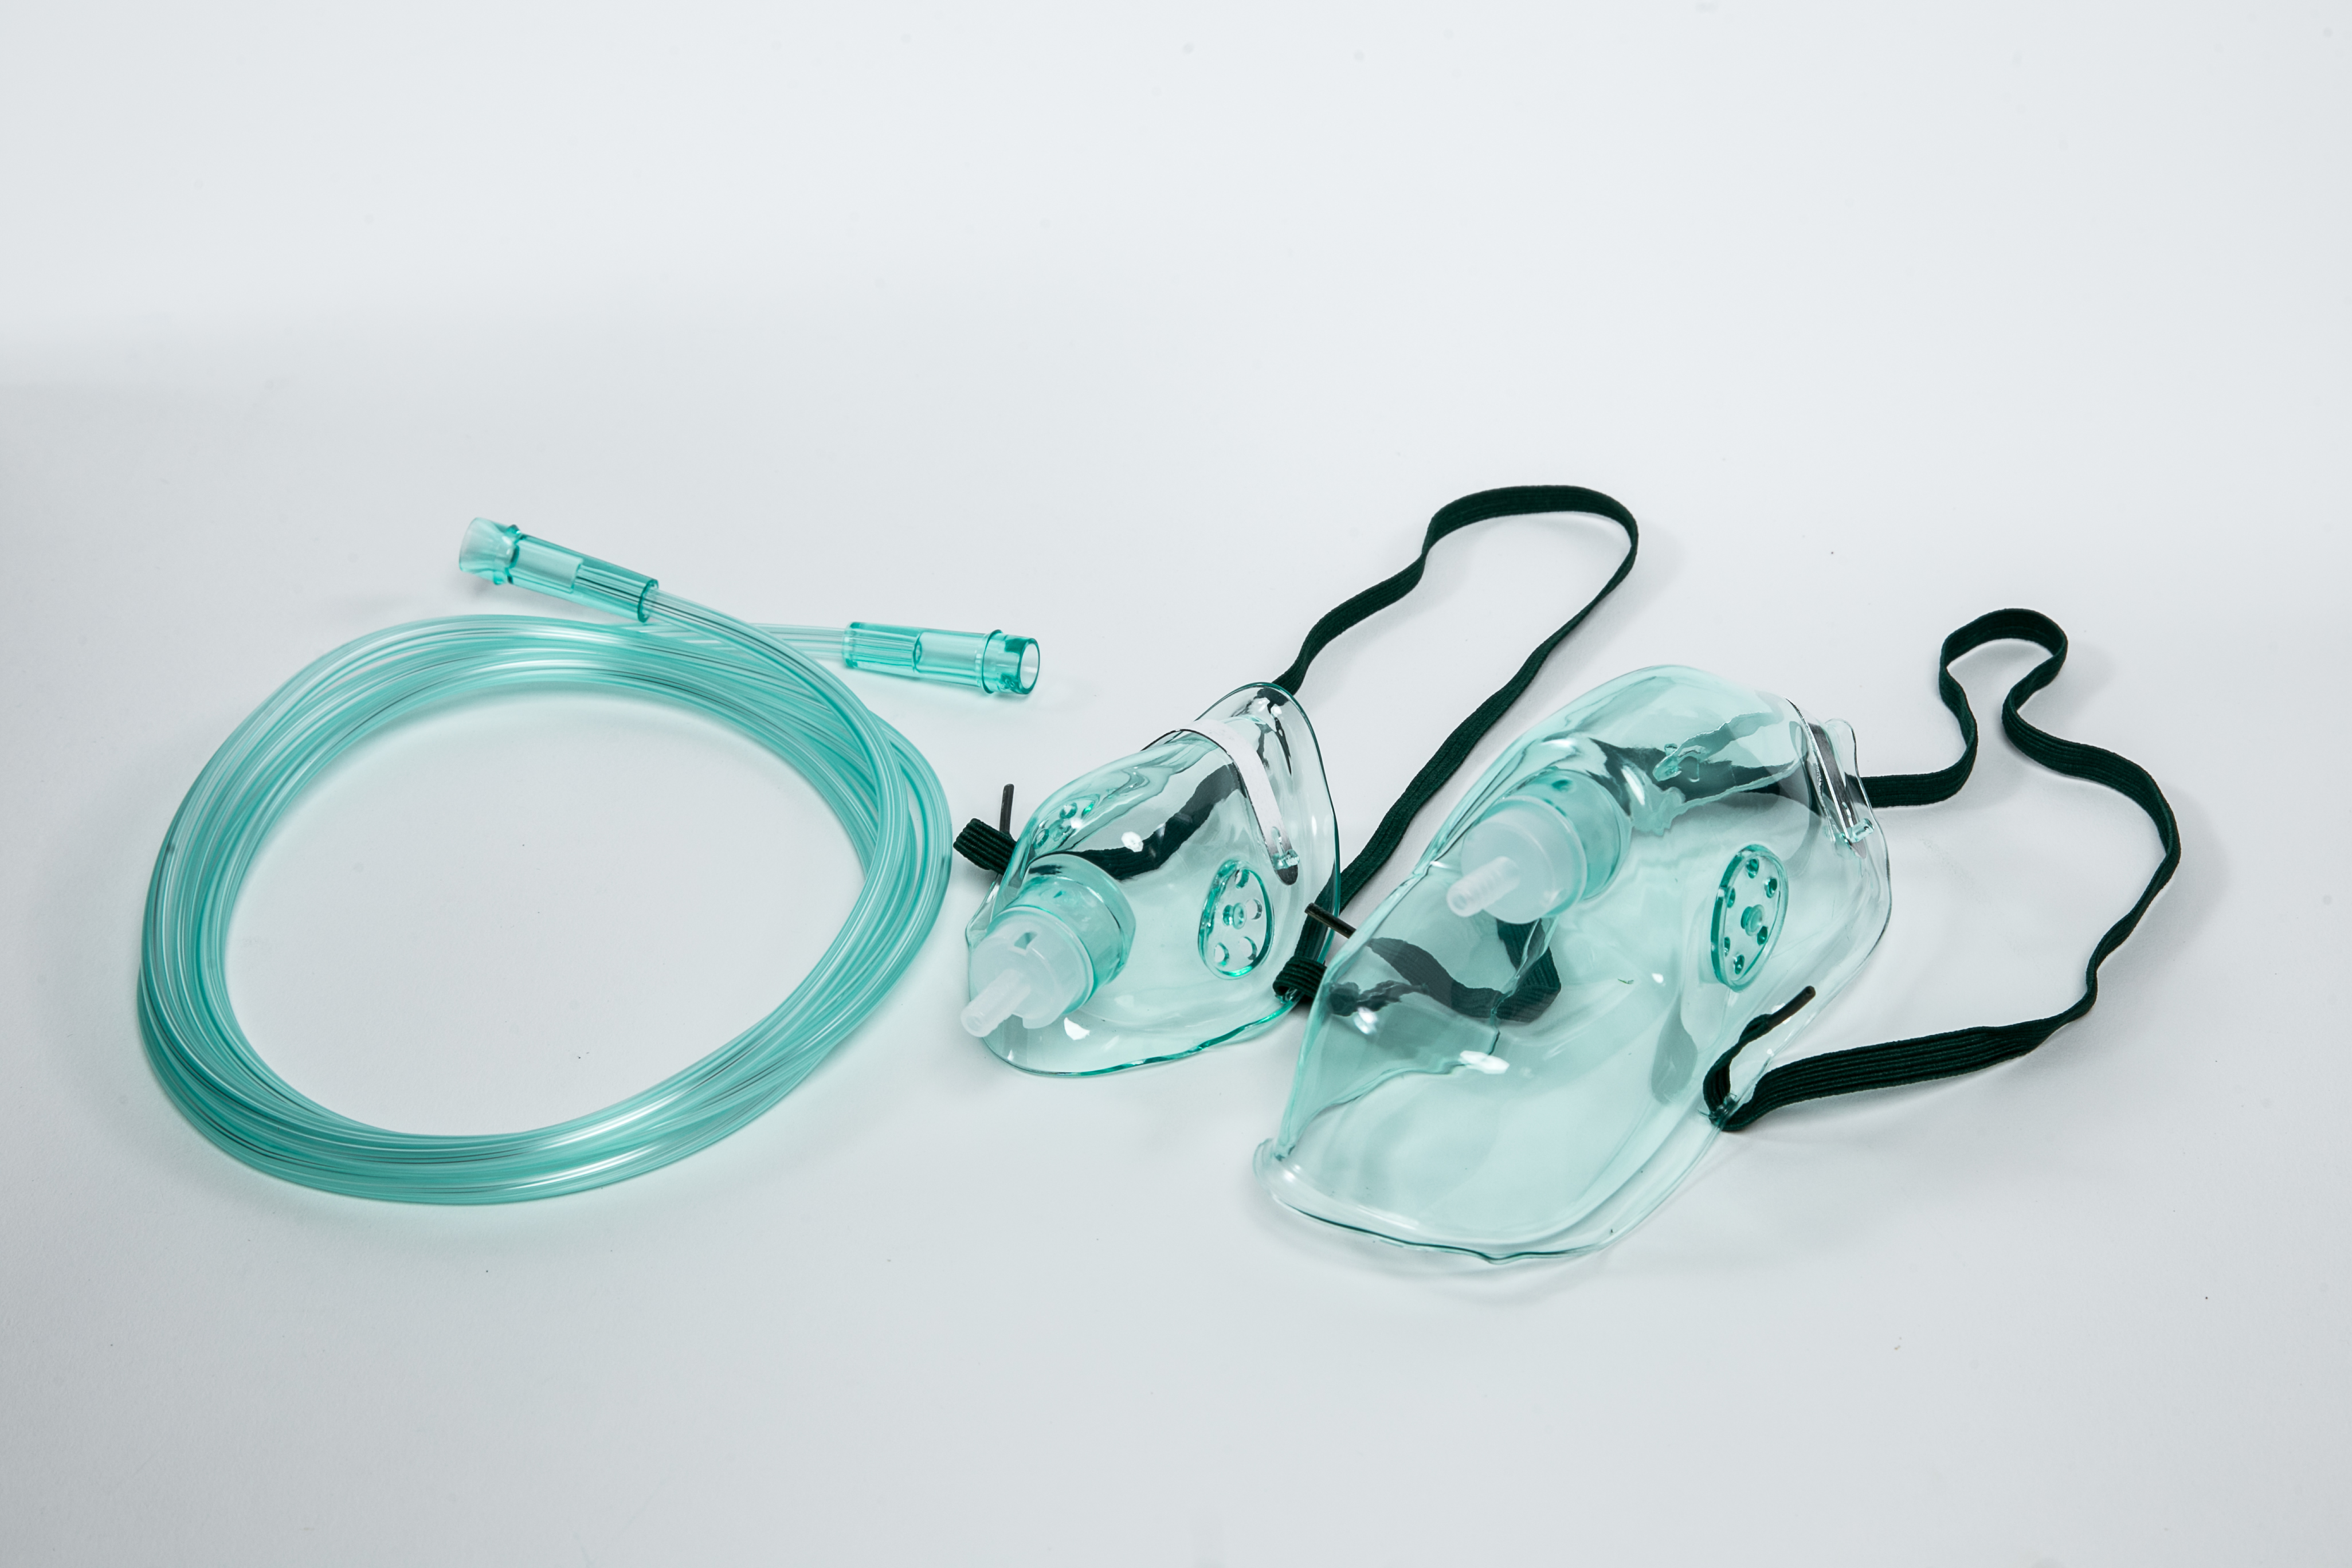 Sterile oxygen elongated mask